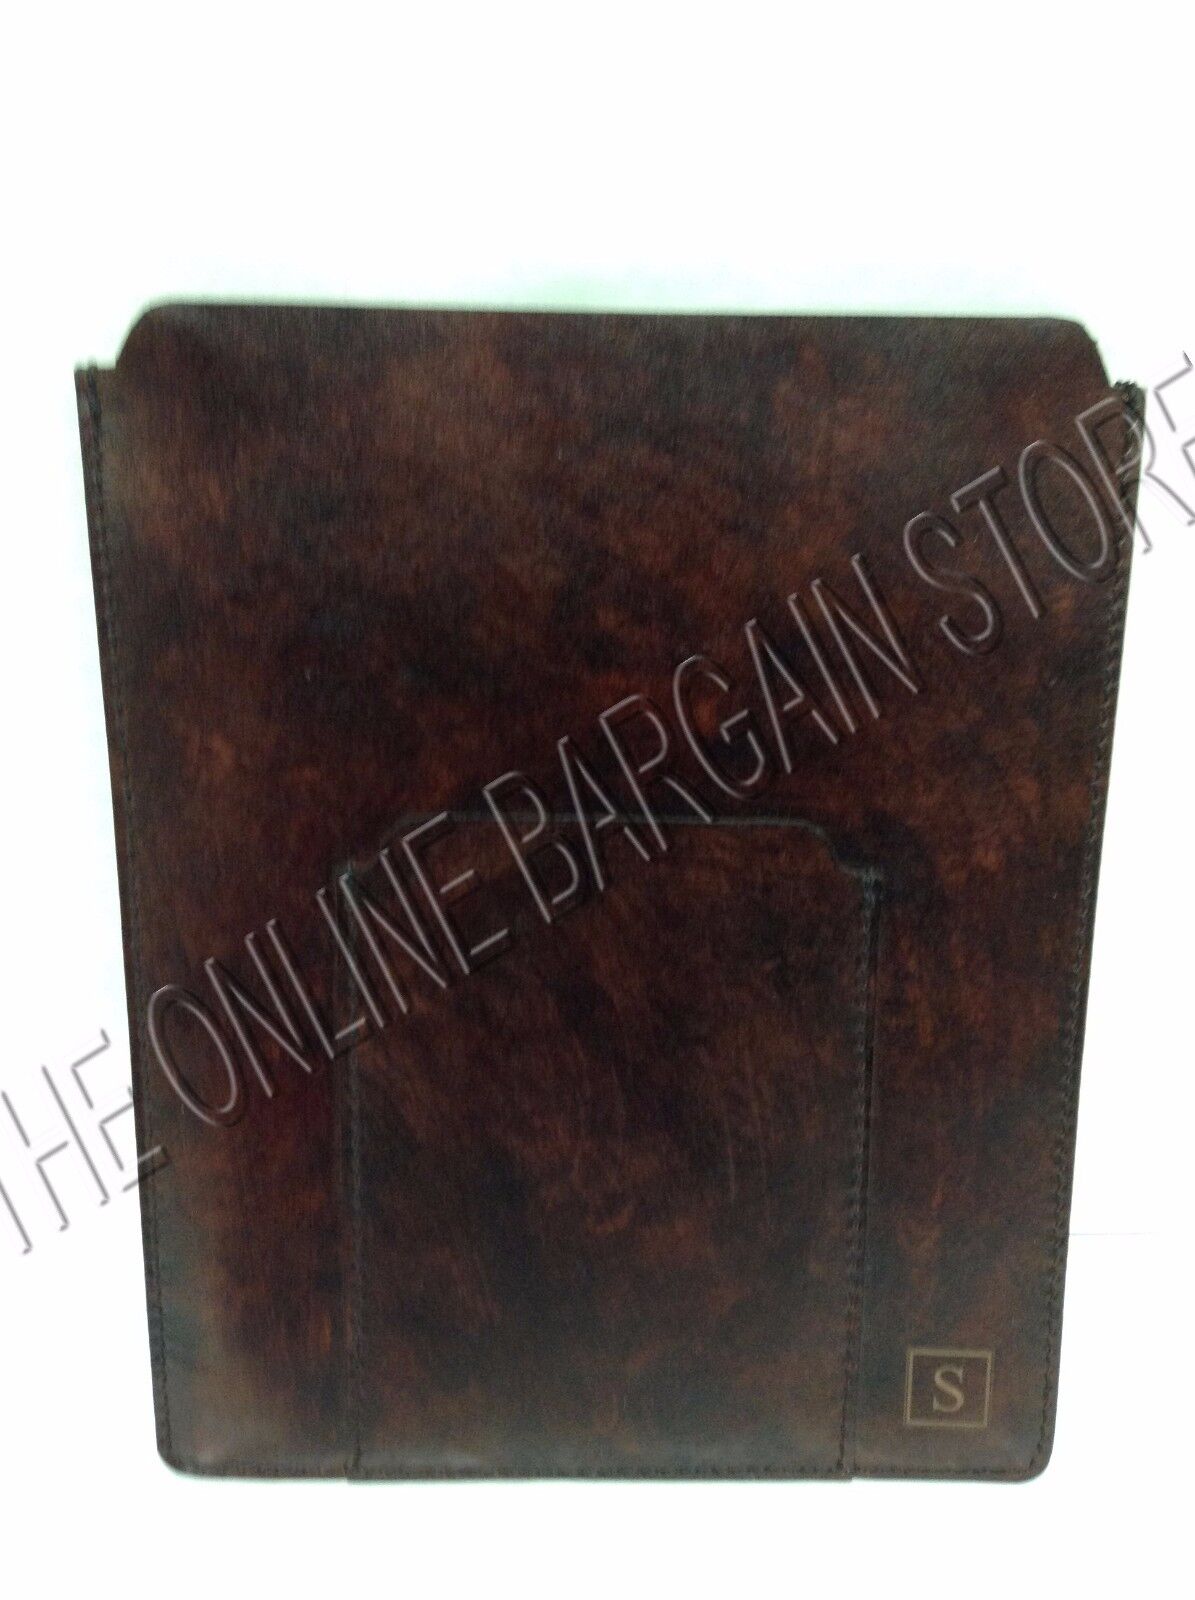 Pottery Barn Saddle Leather Tablet iPad Case Holder Cognac Monogrammed S 